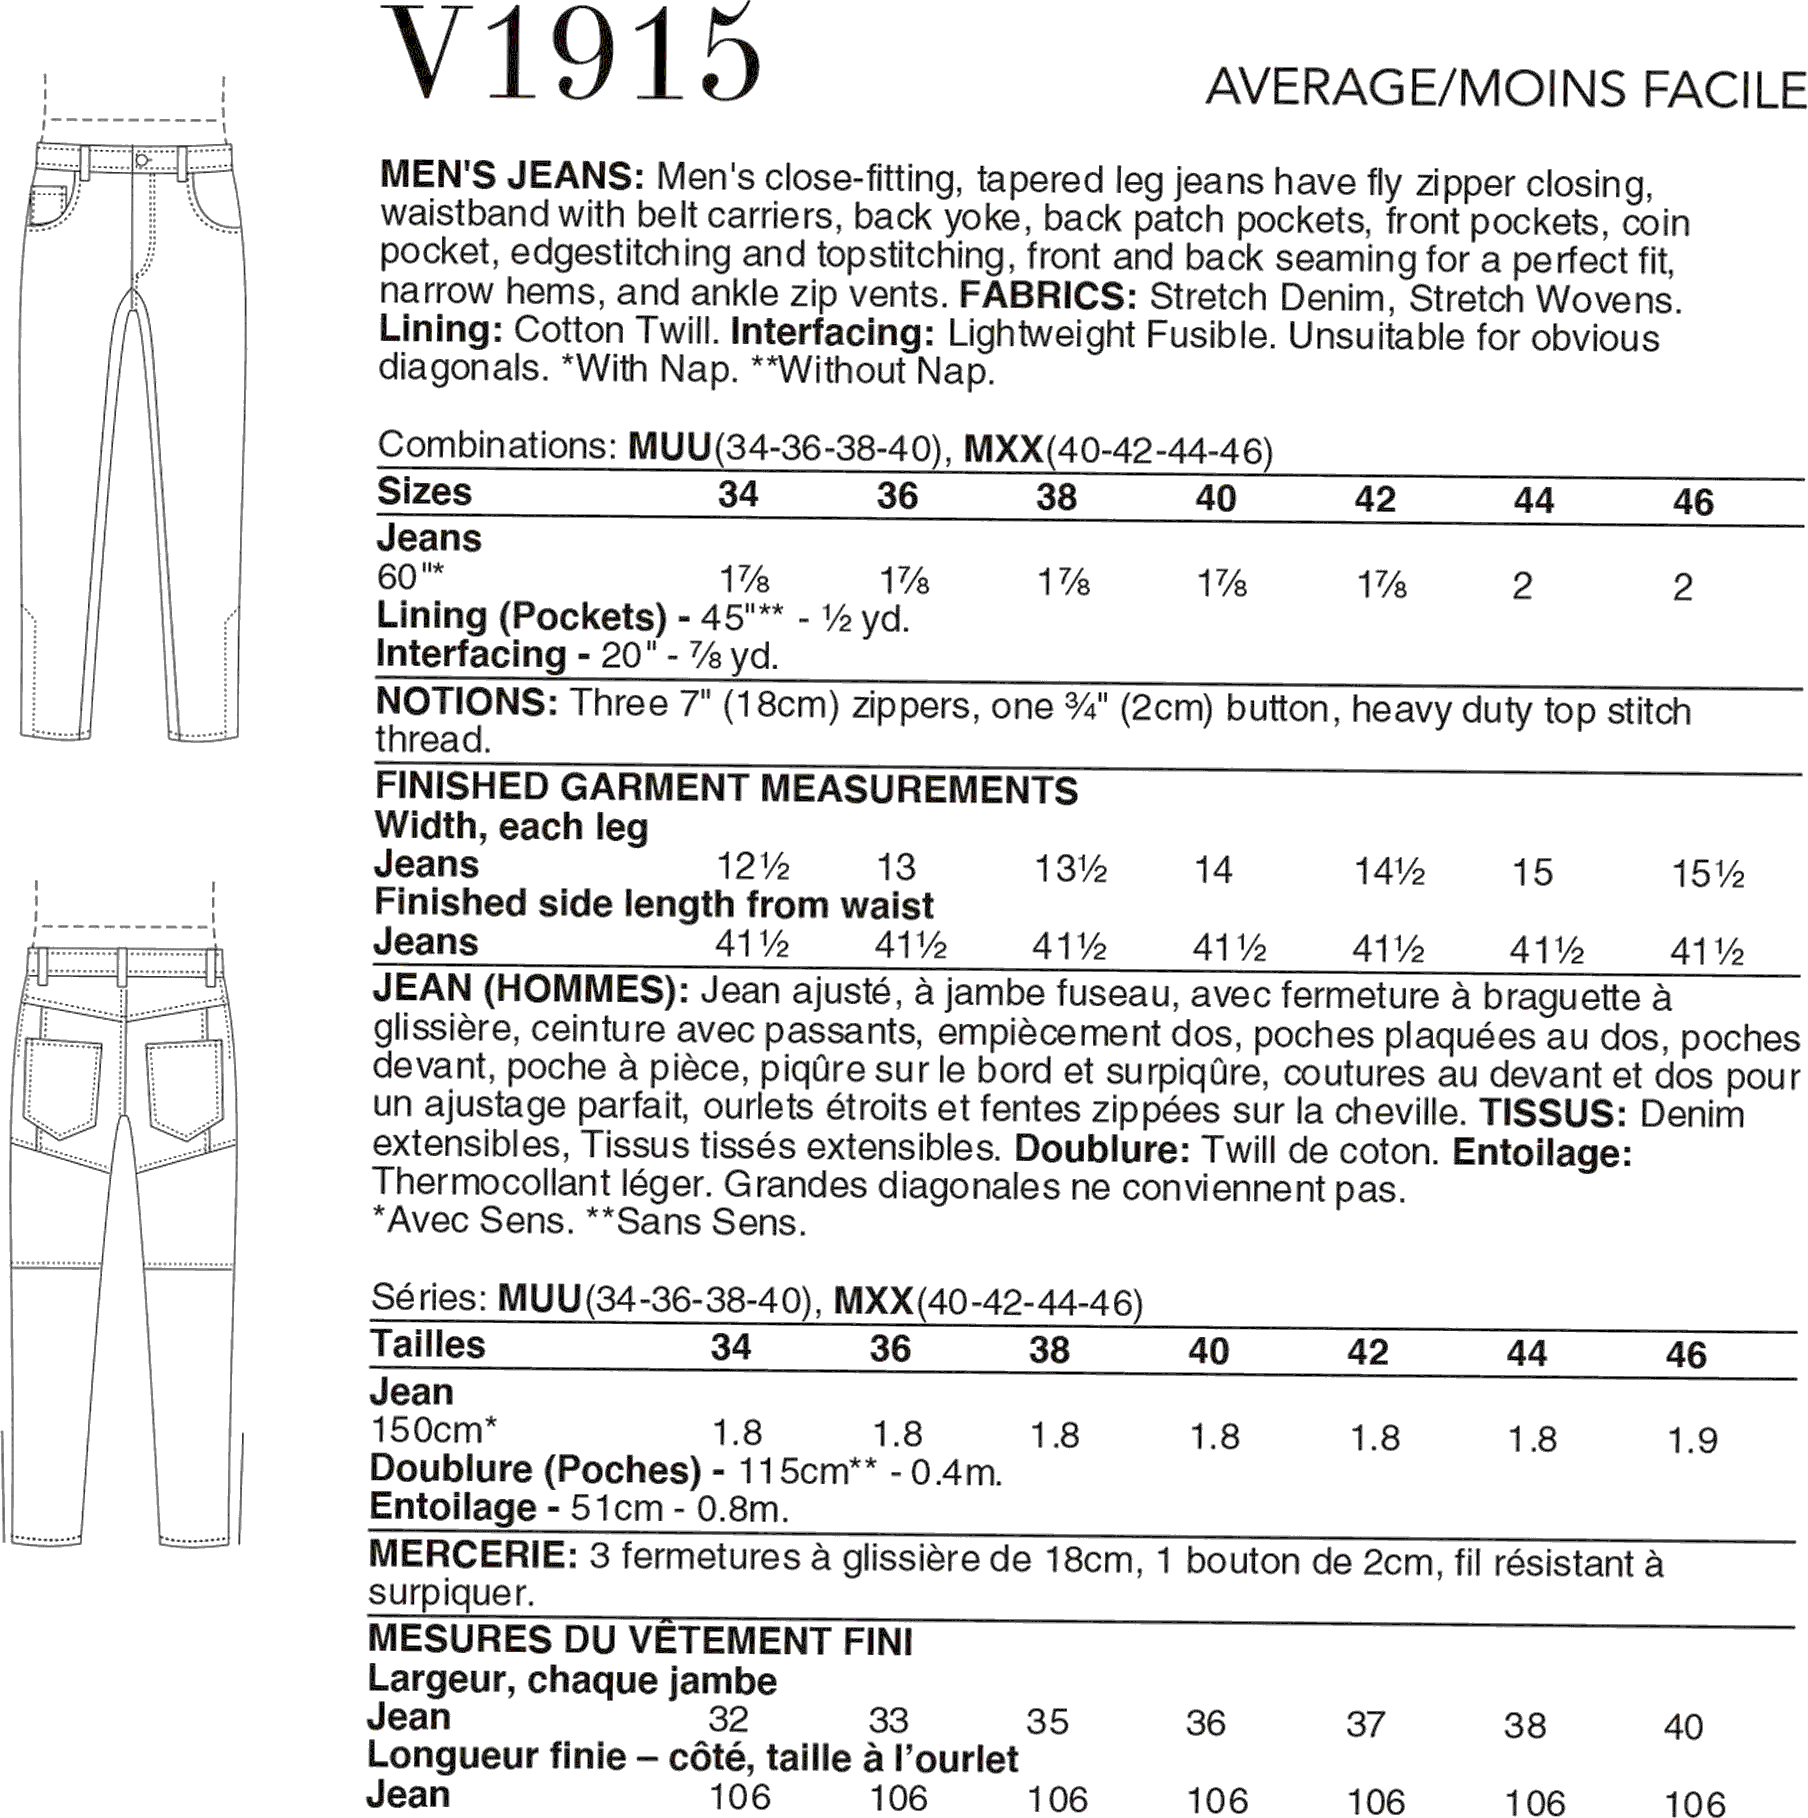 Vogue Pattern V1915 Mens Jeans 1915 Fabric Quantity Requirements From Patternsandplains.com